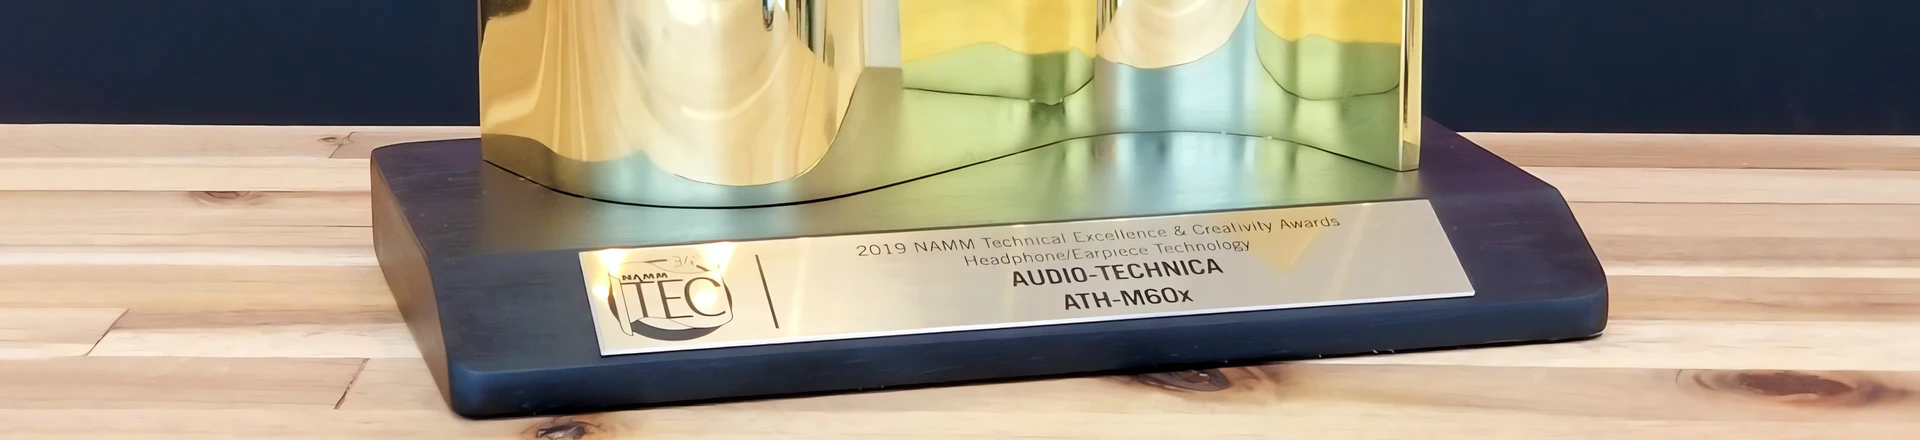 NAMM'19: TEC Award dla słuchawek Audio-Technica ATH-M60x